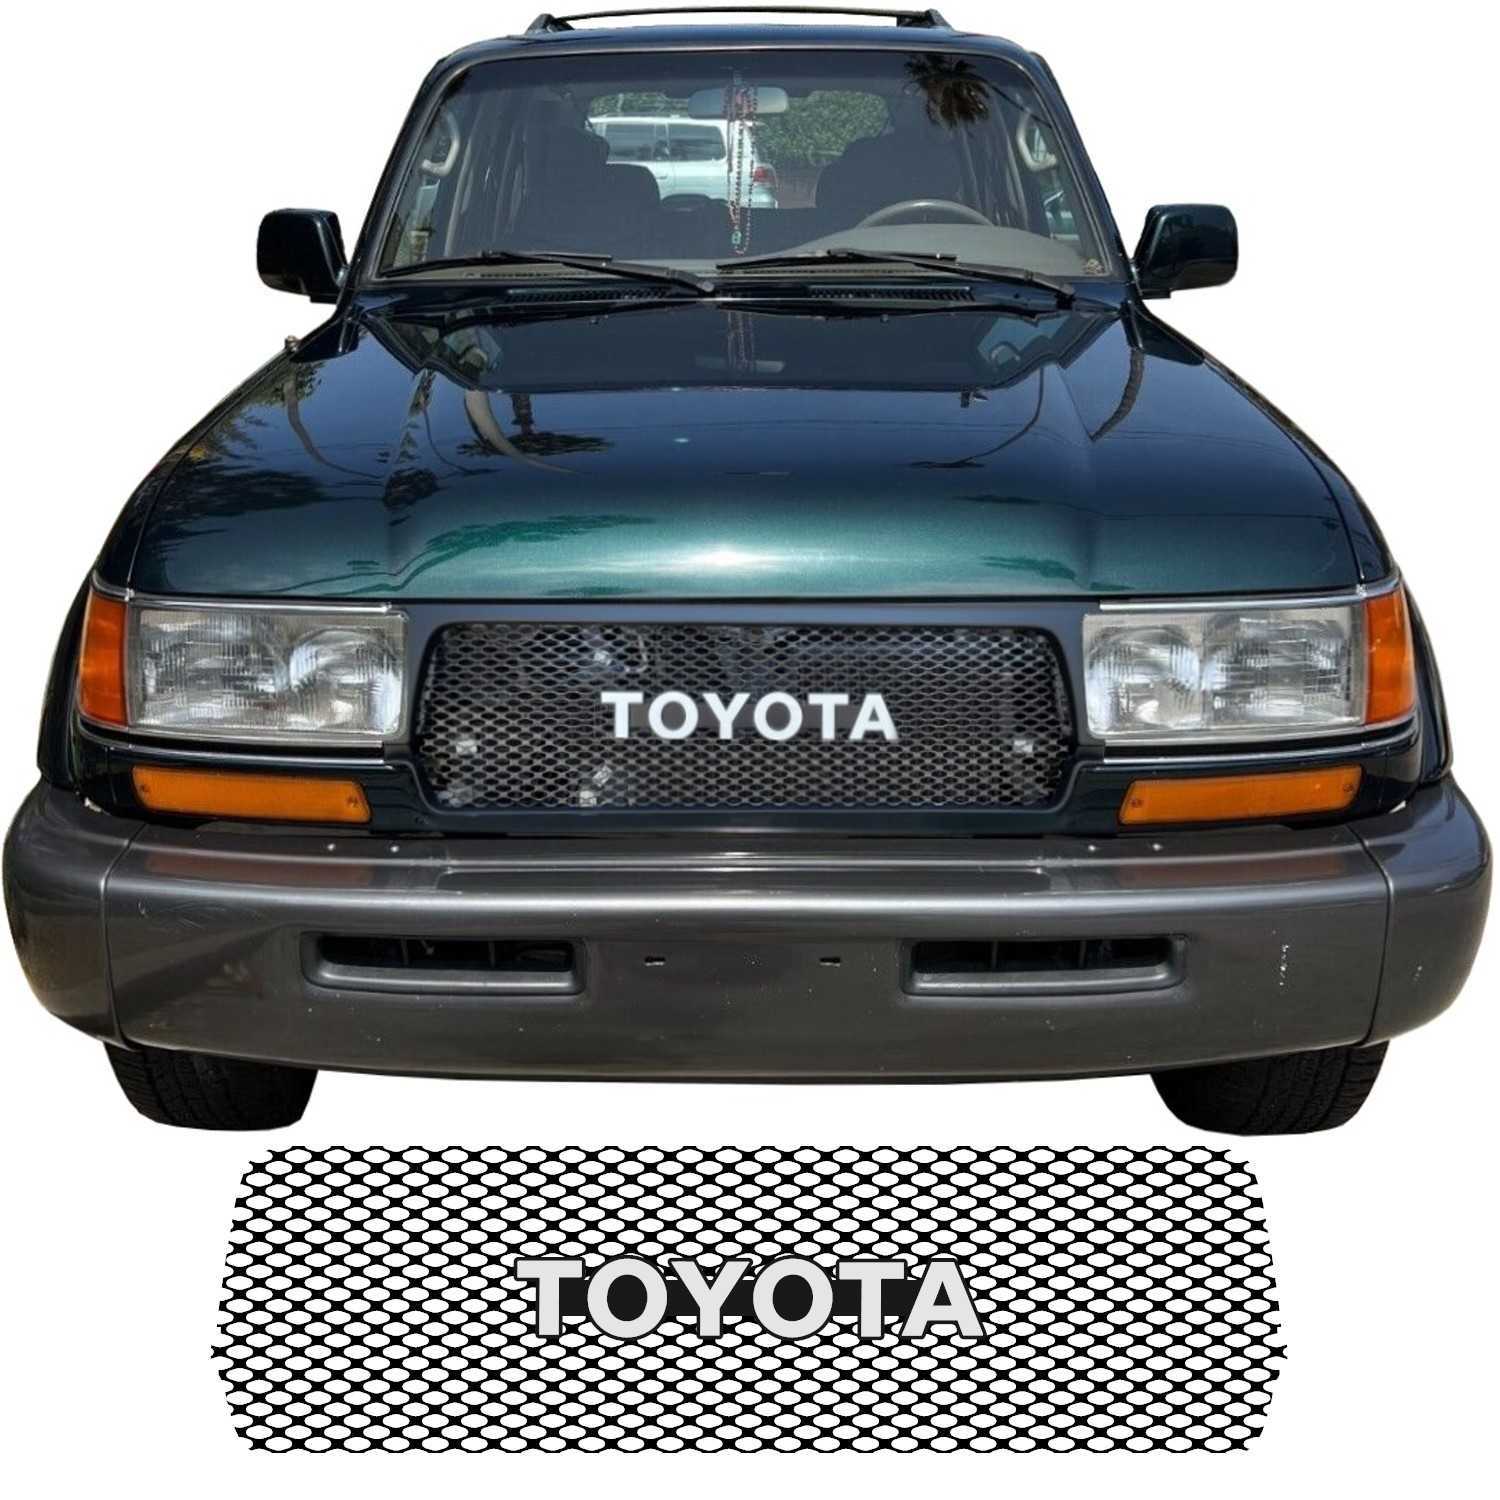 1991 - 1994 Toyota Land Cruiser Series 80 Grill Mesh and Toyota Emblem